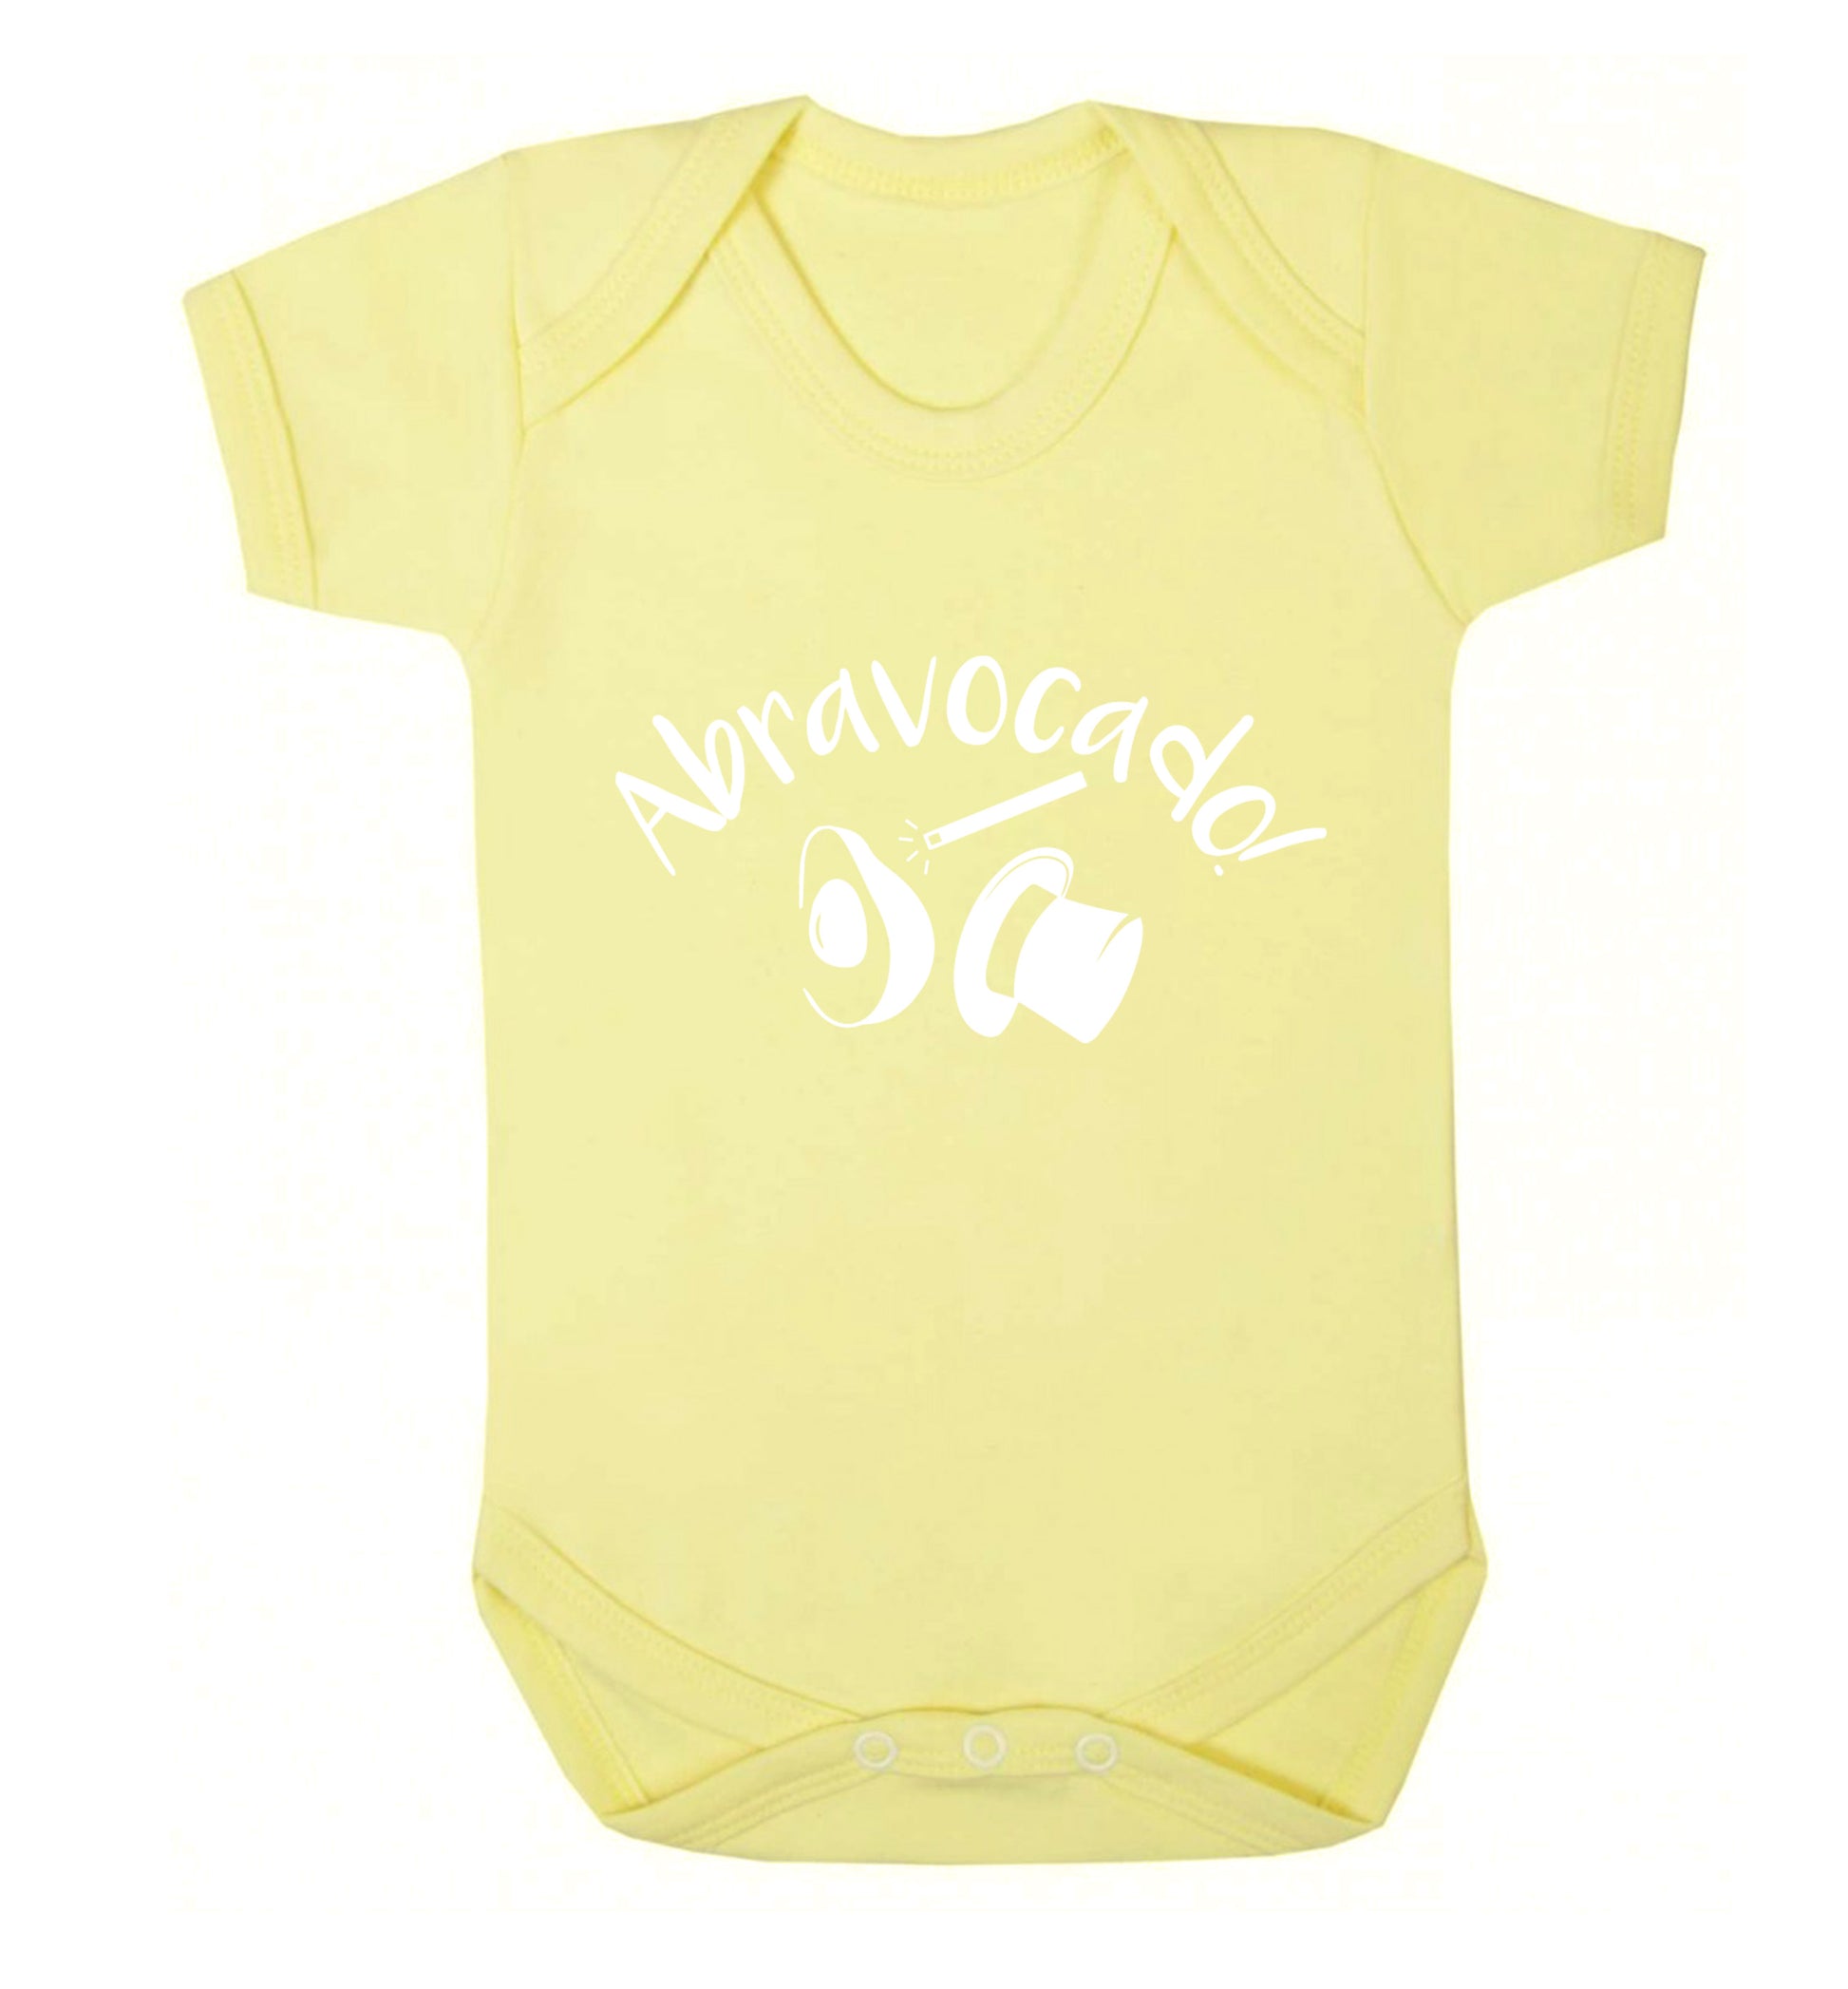 Abravocado Baby Vest pale yellow 18-24 months